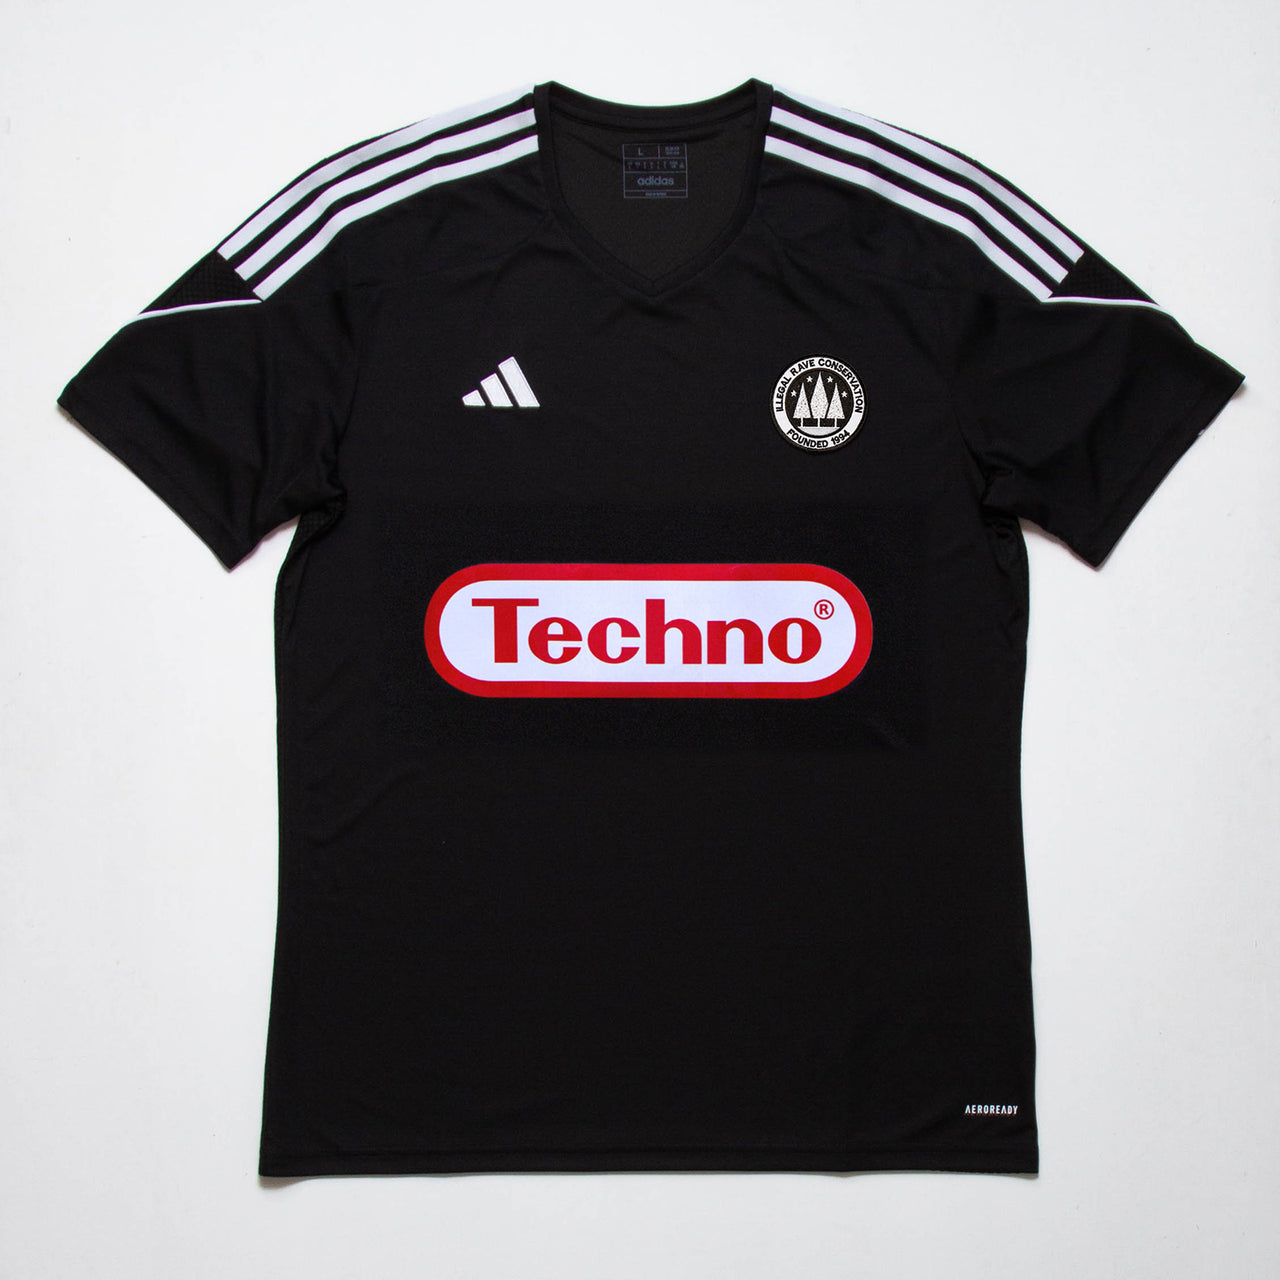 Super Techno FC League Tiro 23 - Training Jersey - Black/White